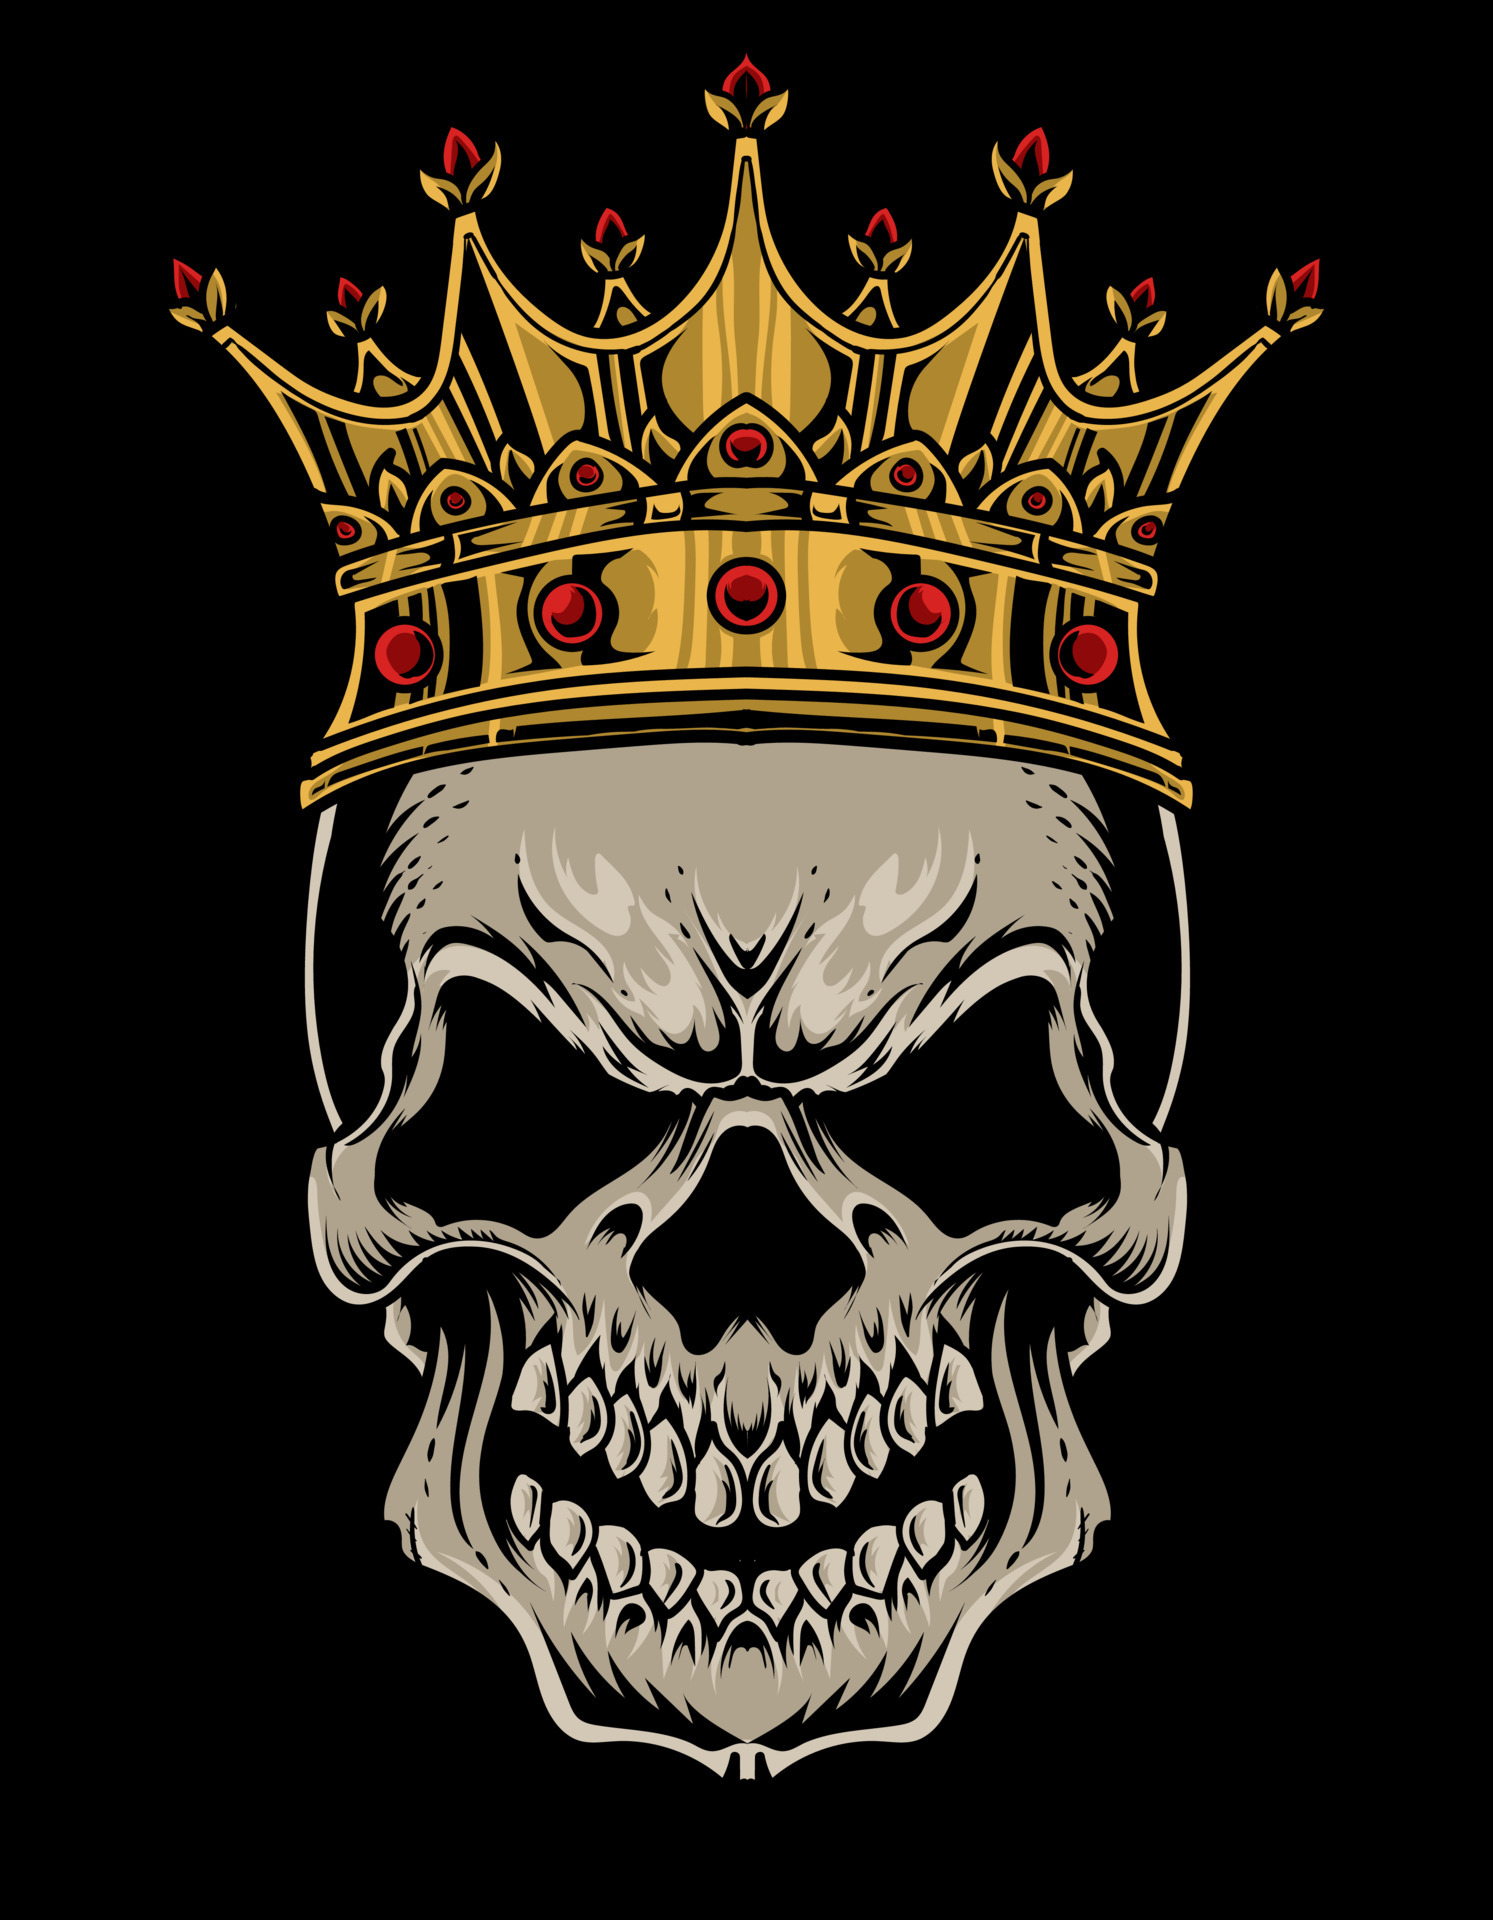 https://static.vecteezy.com/system/resources/previews/004/680/105/original/illustration-skull-king-crown-free-vector.jpg